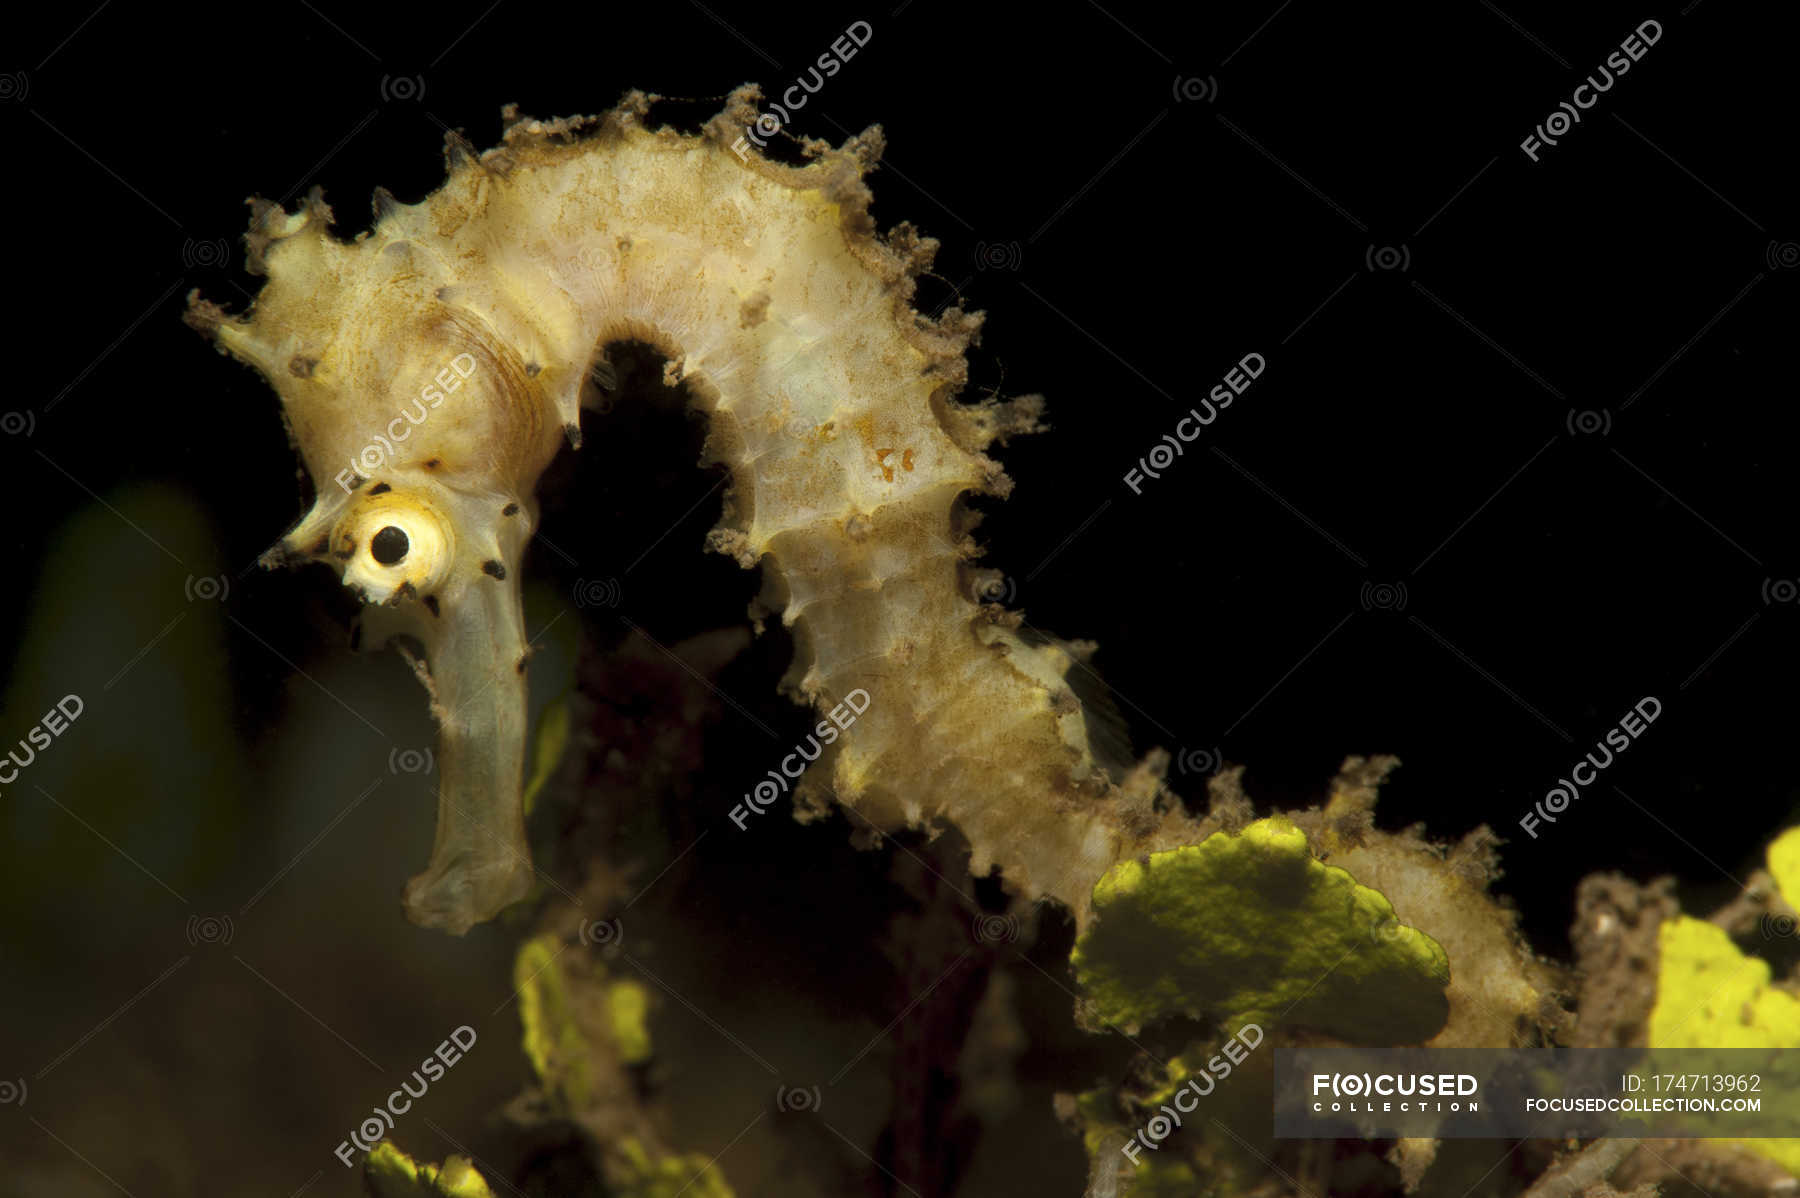 Thorny seahorse closeup shot — Stock Photo | #174713962